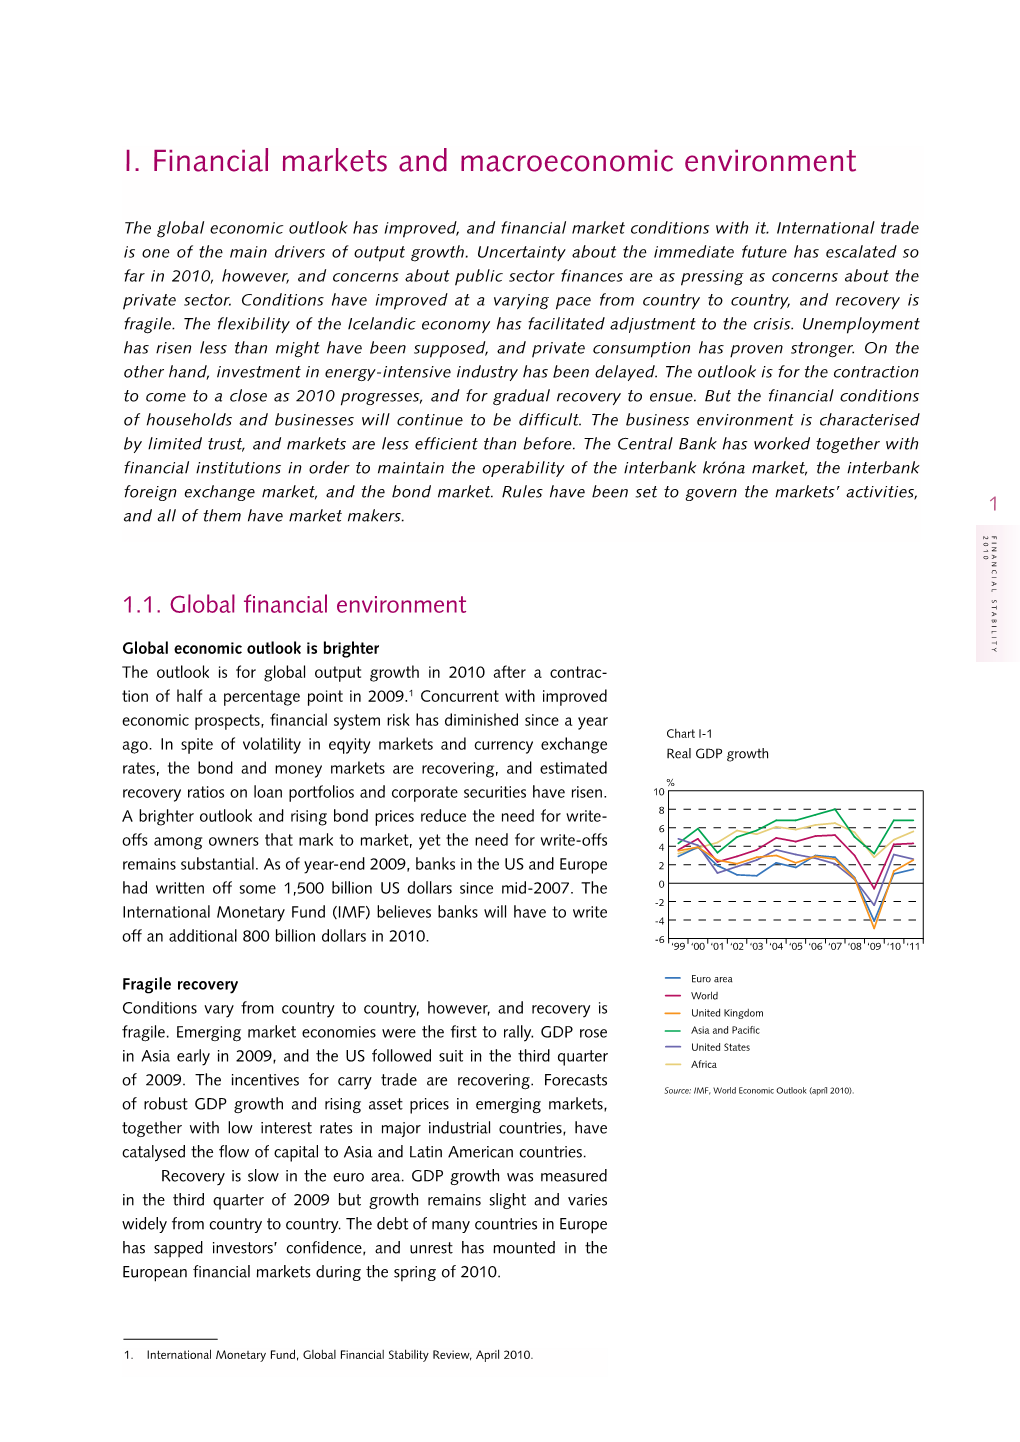 I. Financial Markets and Macroeconomic Environment